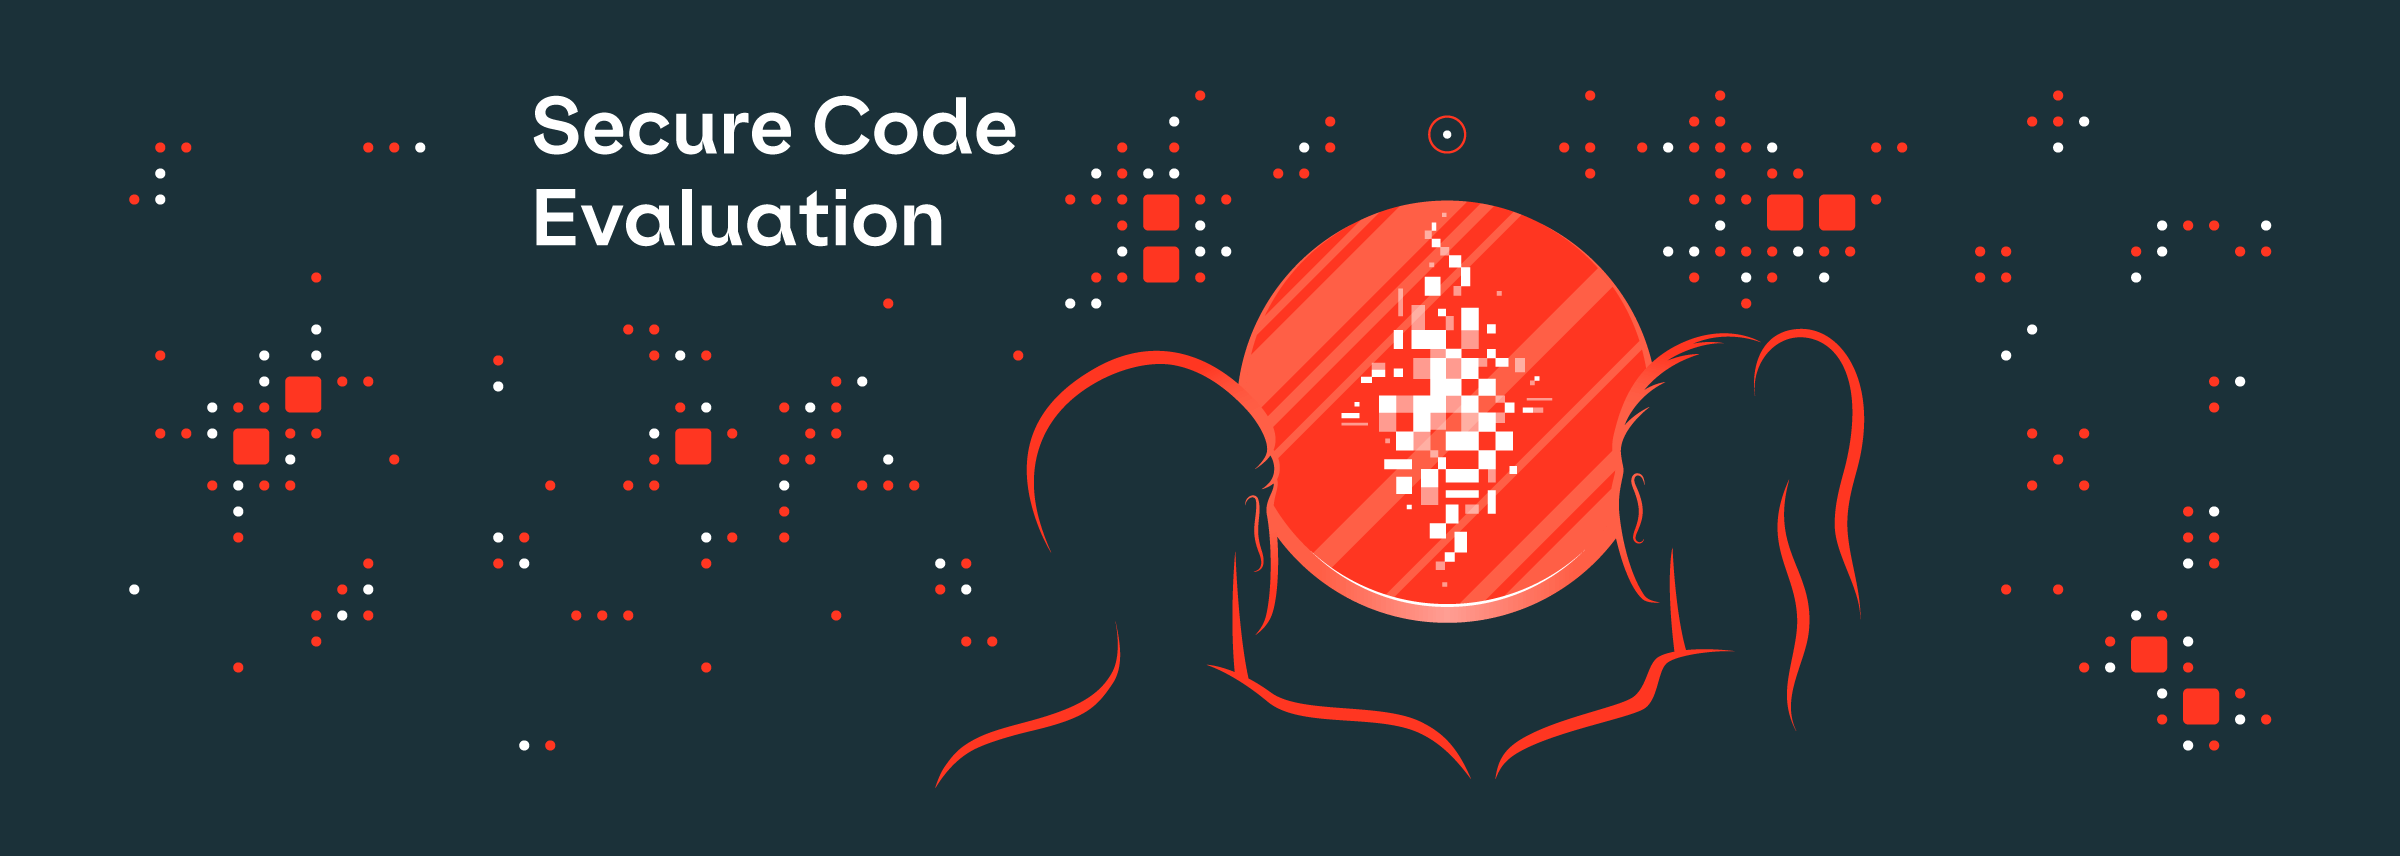 End-to-End Secure Evaluation of Code Generation Models